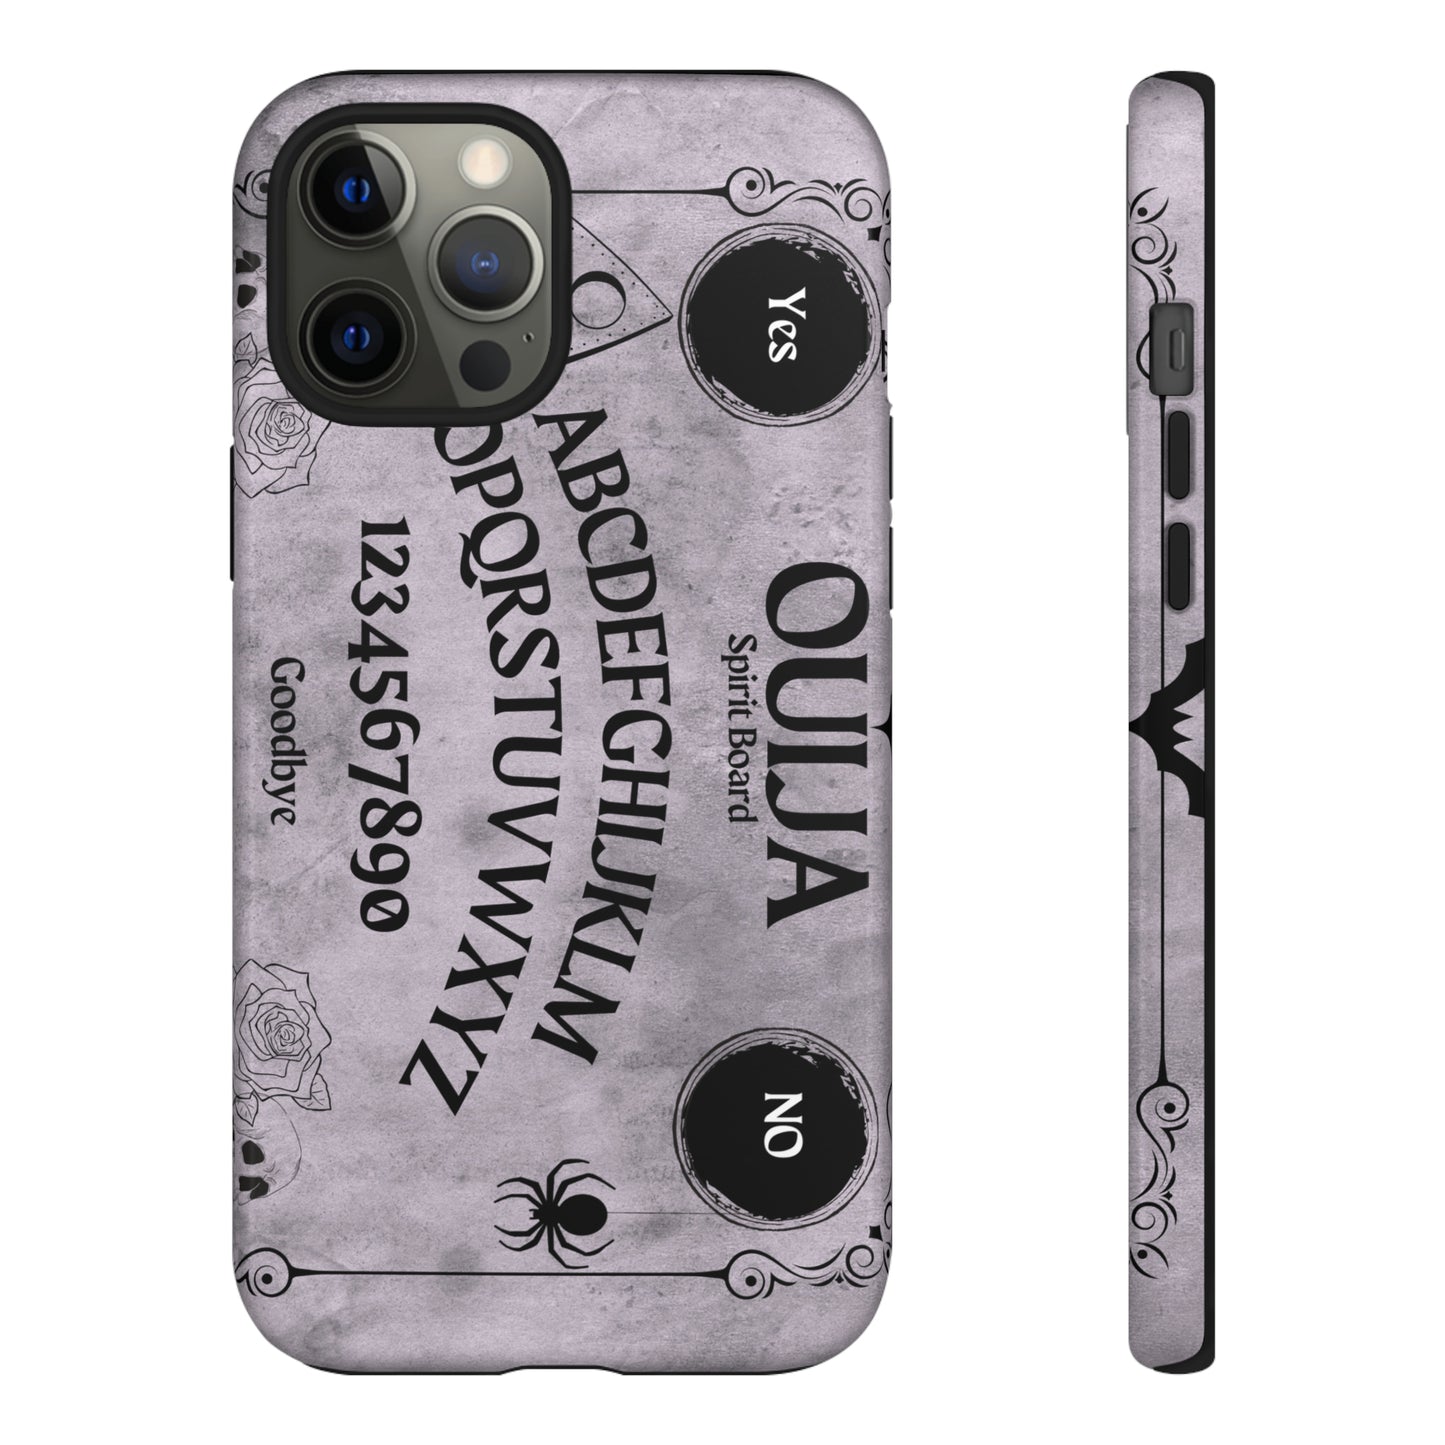 Ouija Board Tough Phone Cases For Samsung iPhone GooglePhone CaseVTZdesignsiPhone 12 Pro MaxGlossyAccessoriesGlossyhalloween